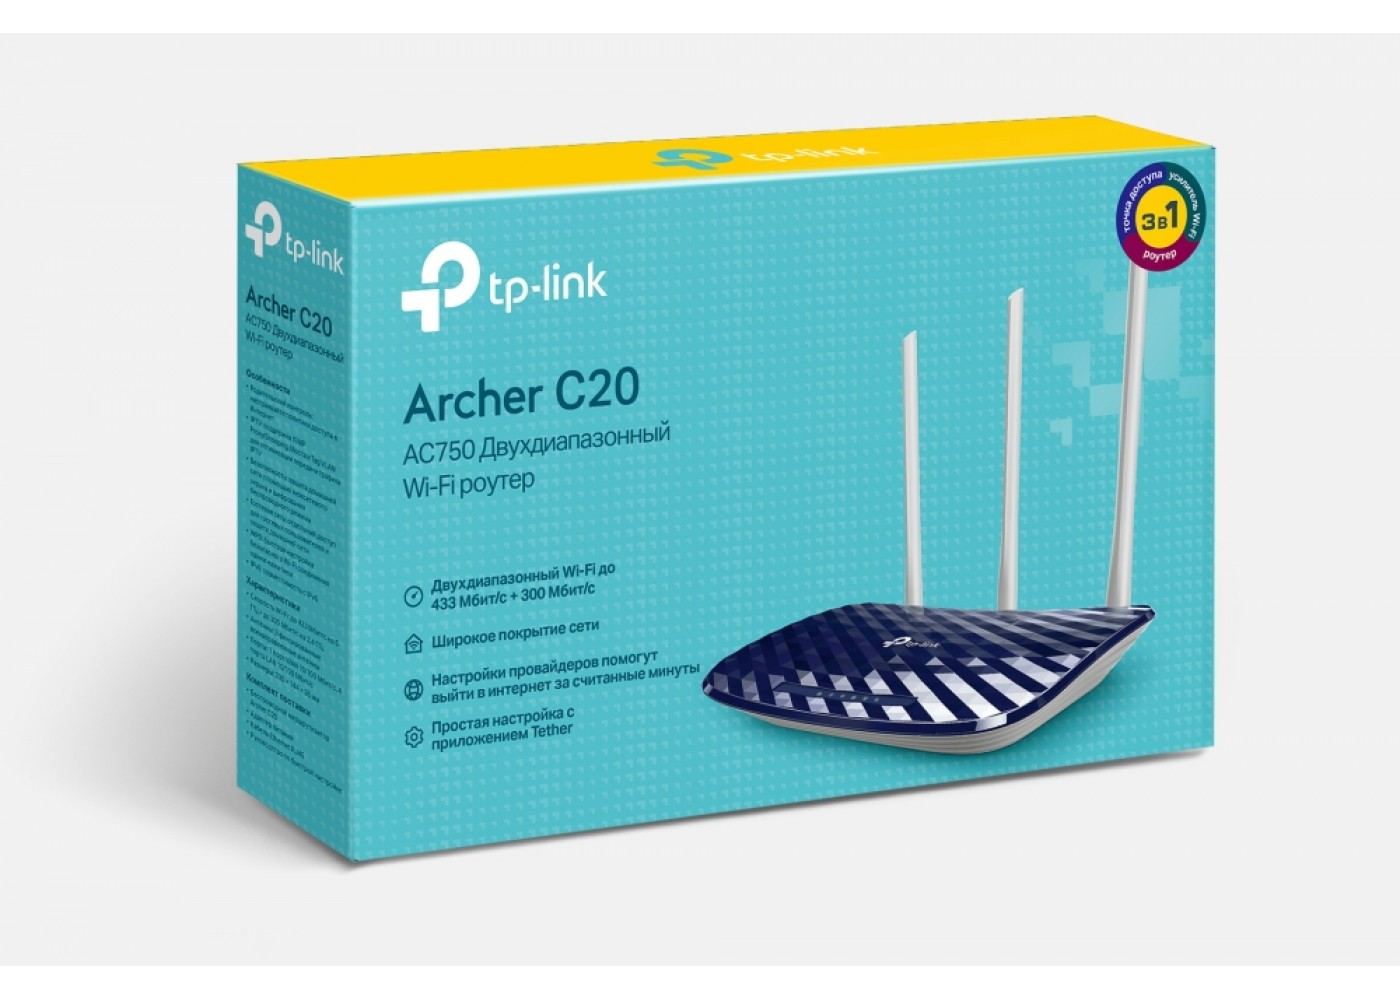 Wi-Fi роутер TP-LINK Archer C20 (Двухдиапазонный) (Оптика) недорого